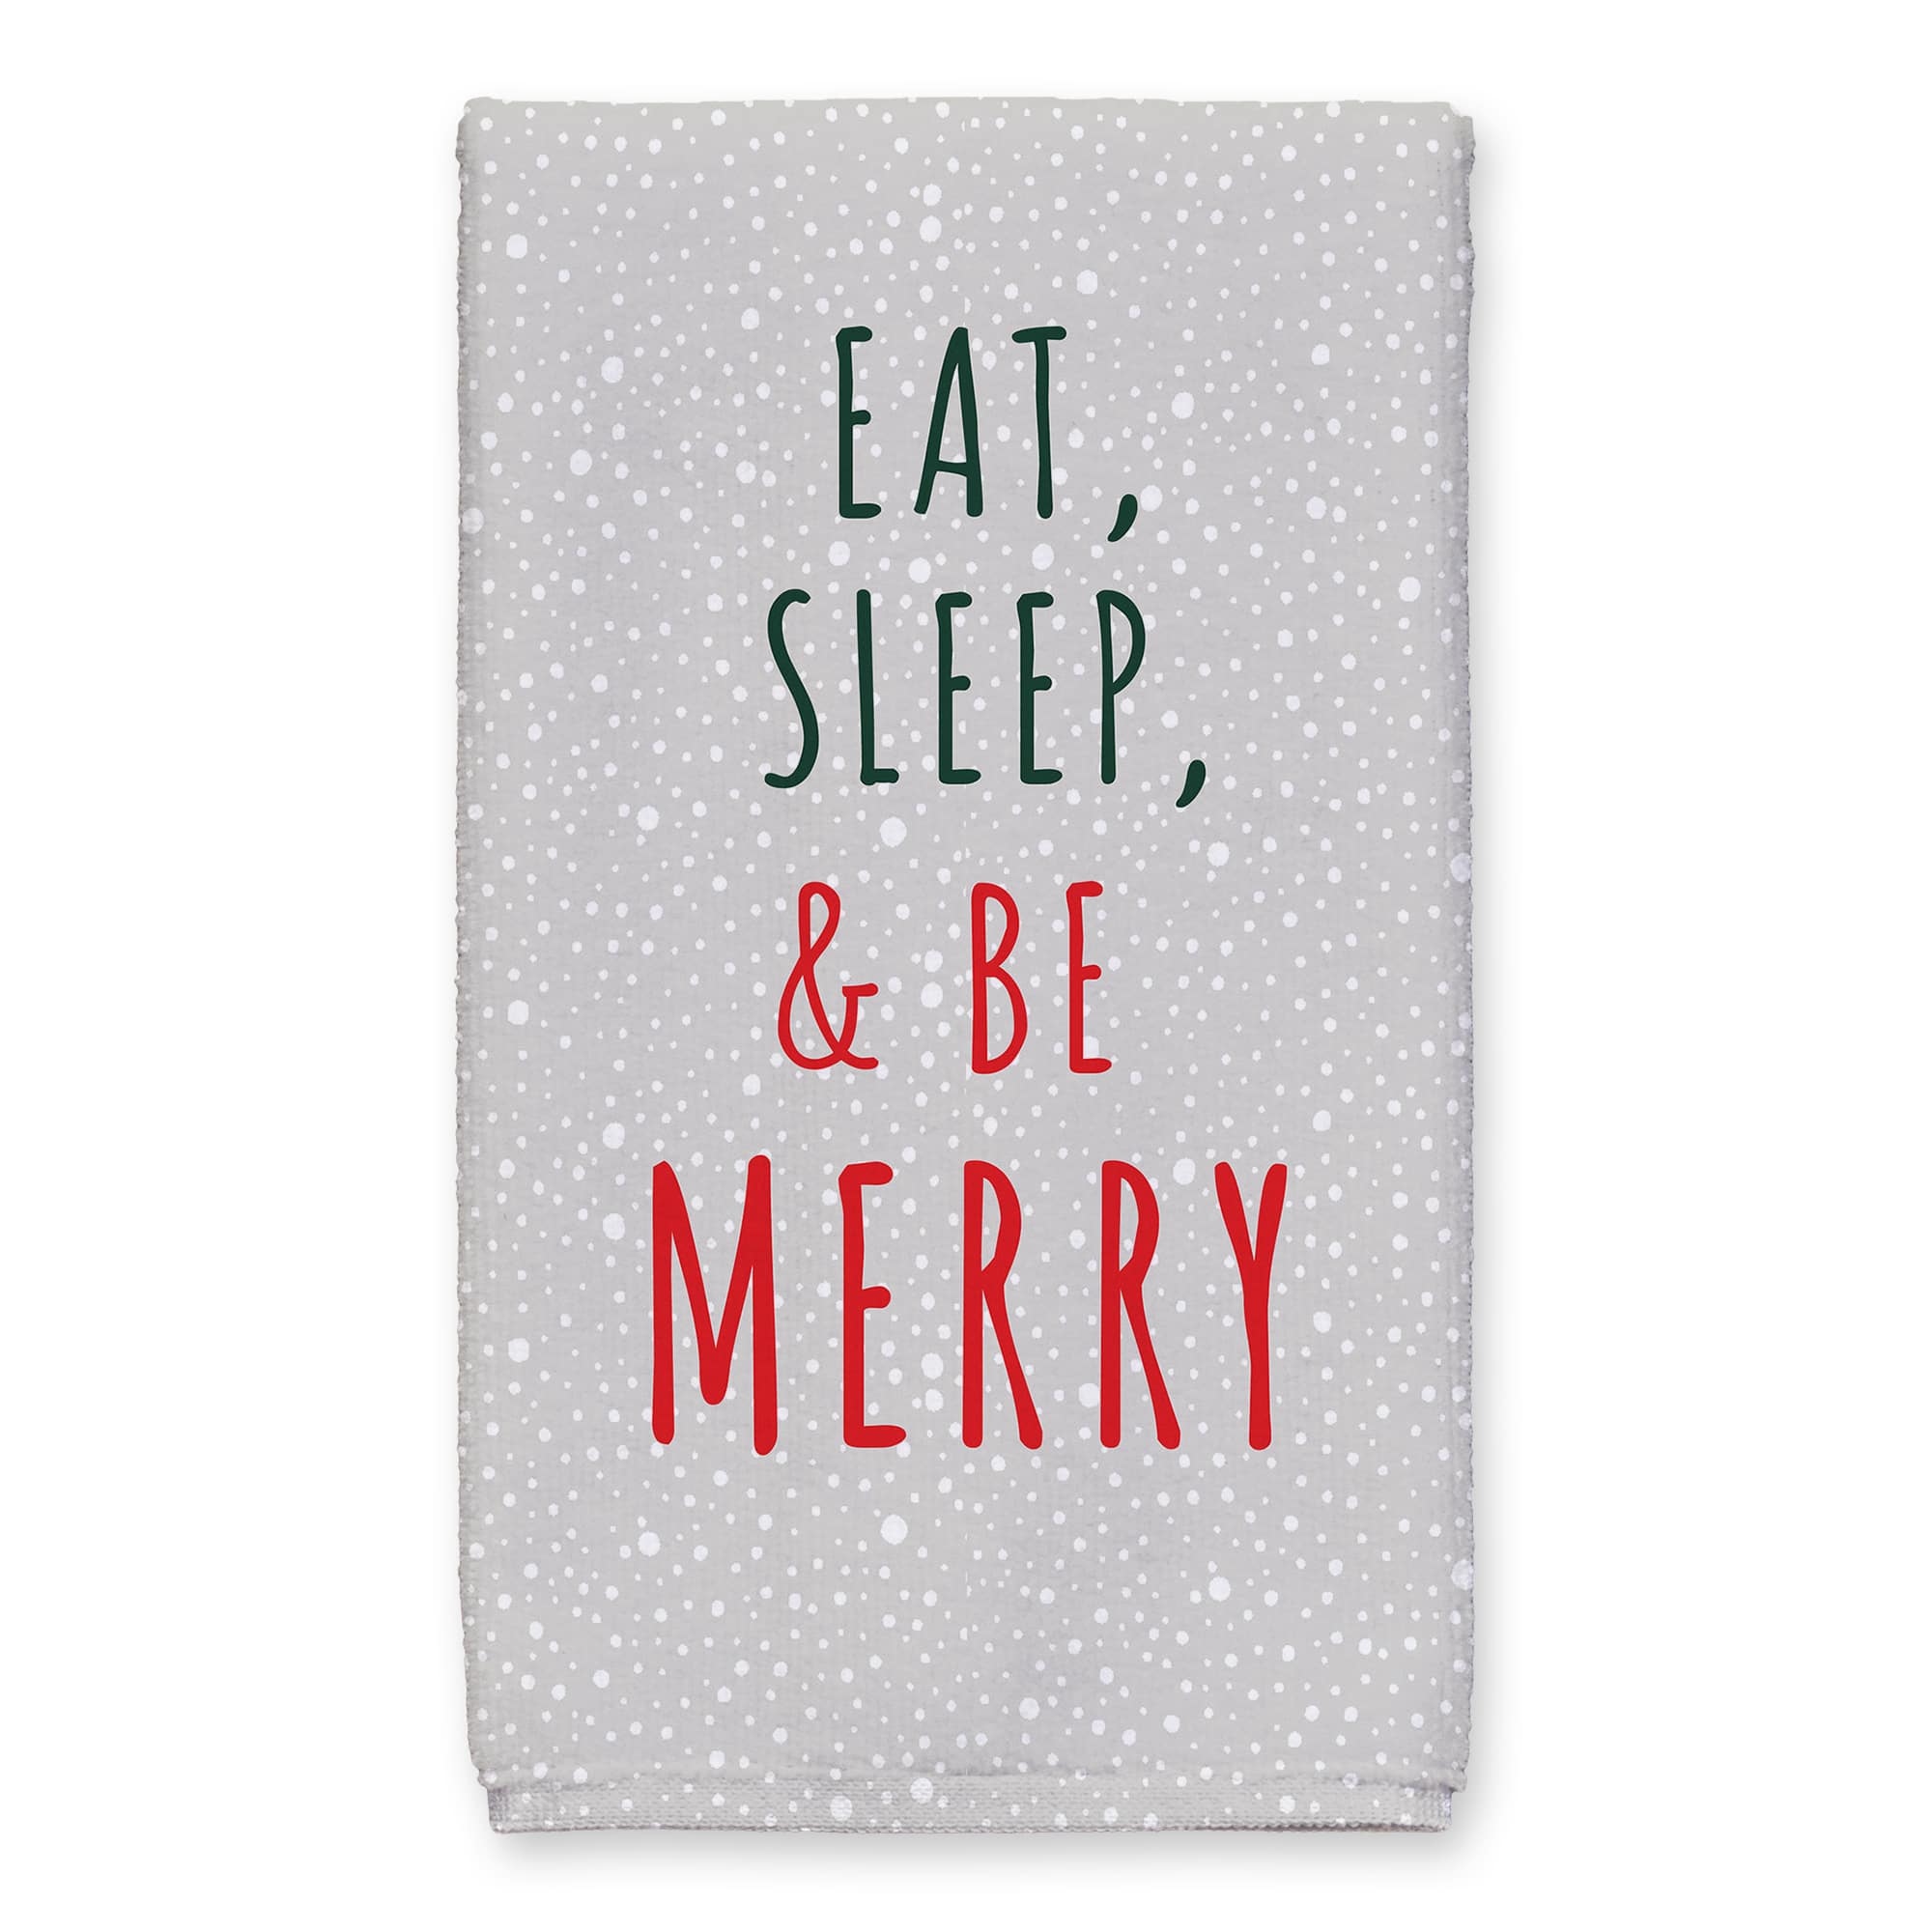 Eat Sleep Be Merry Sloth Tea Towels - Set of 2